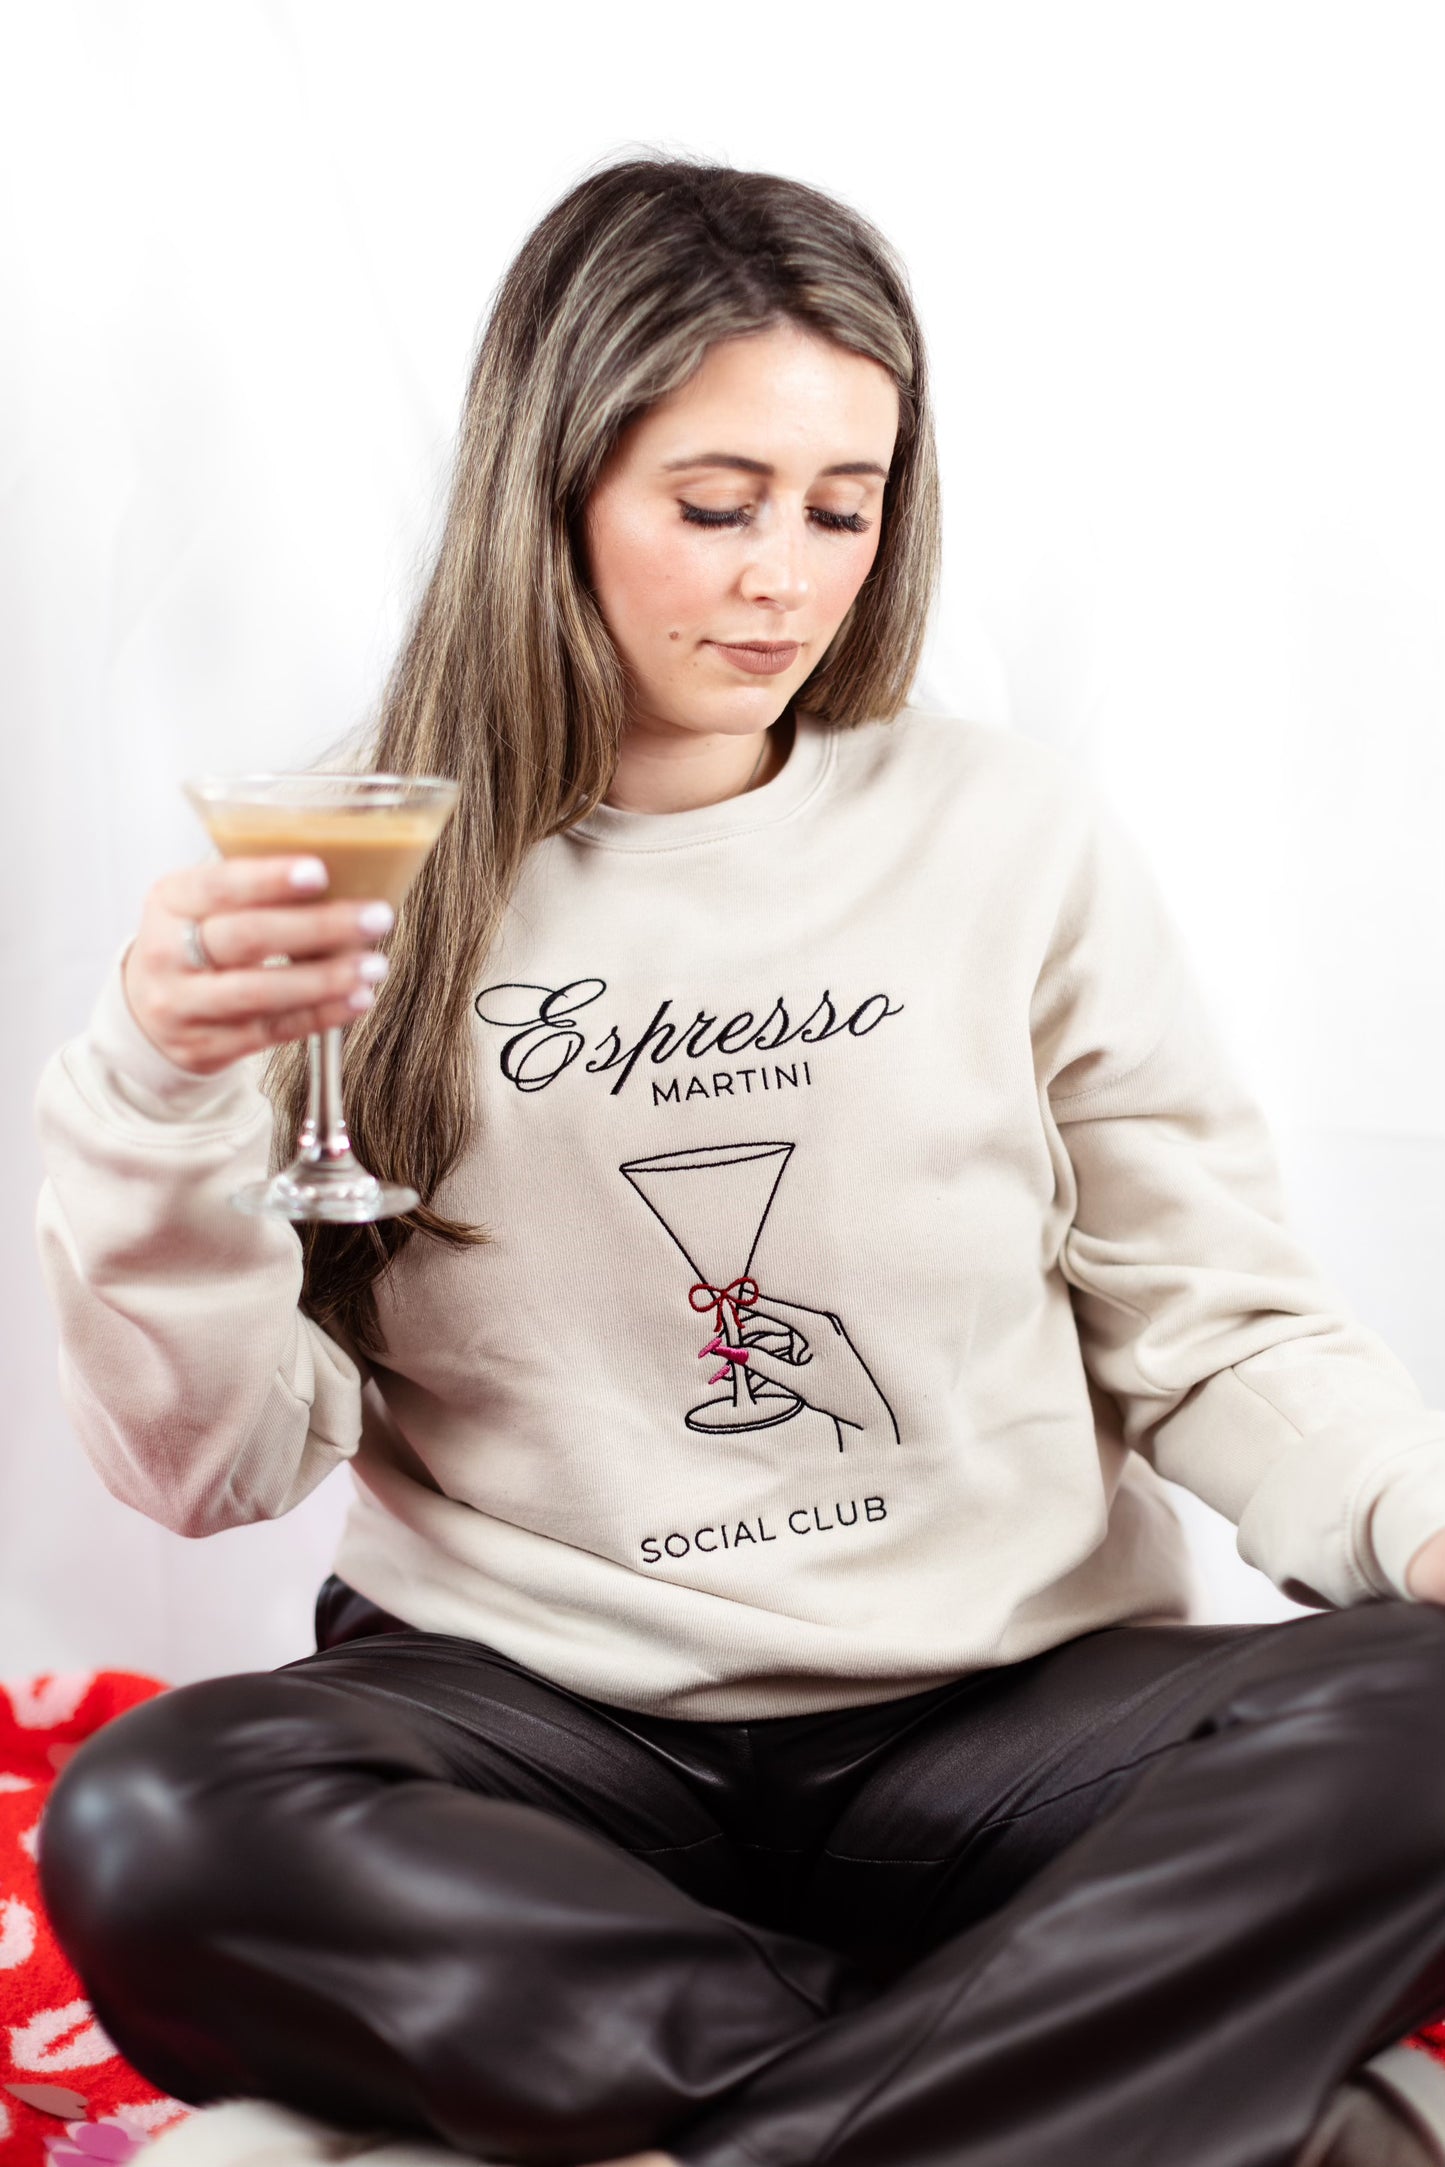 Espresso Martini Social Club Embroidered Sweatshirt